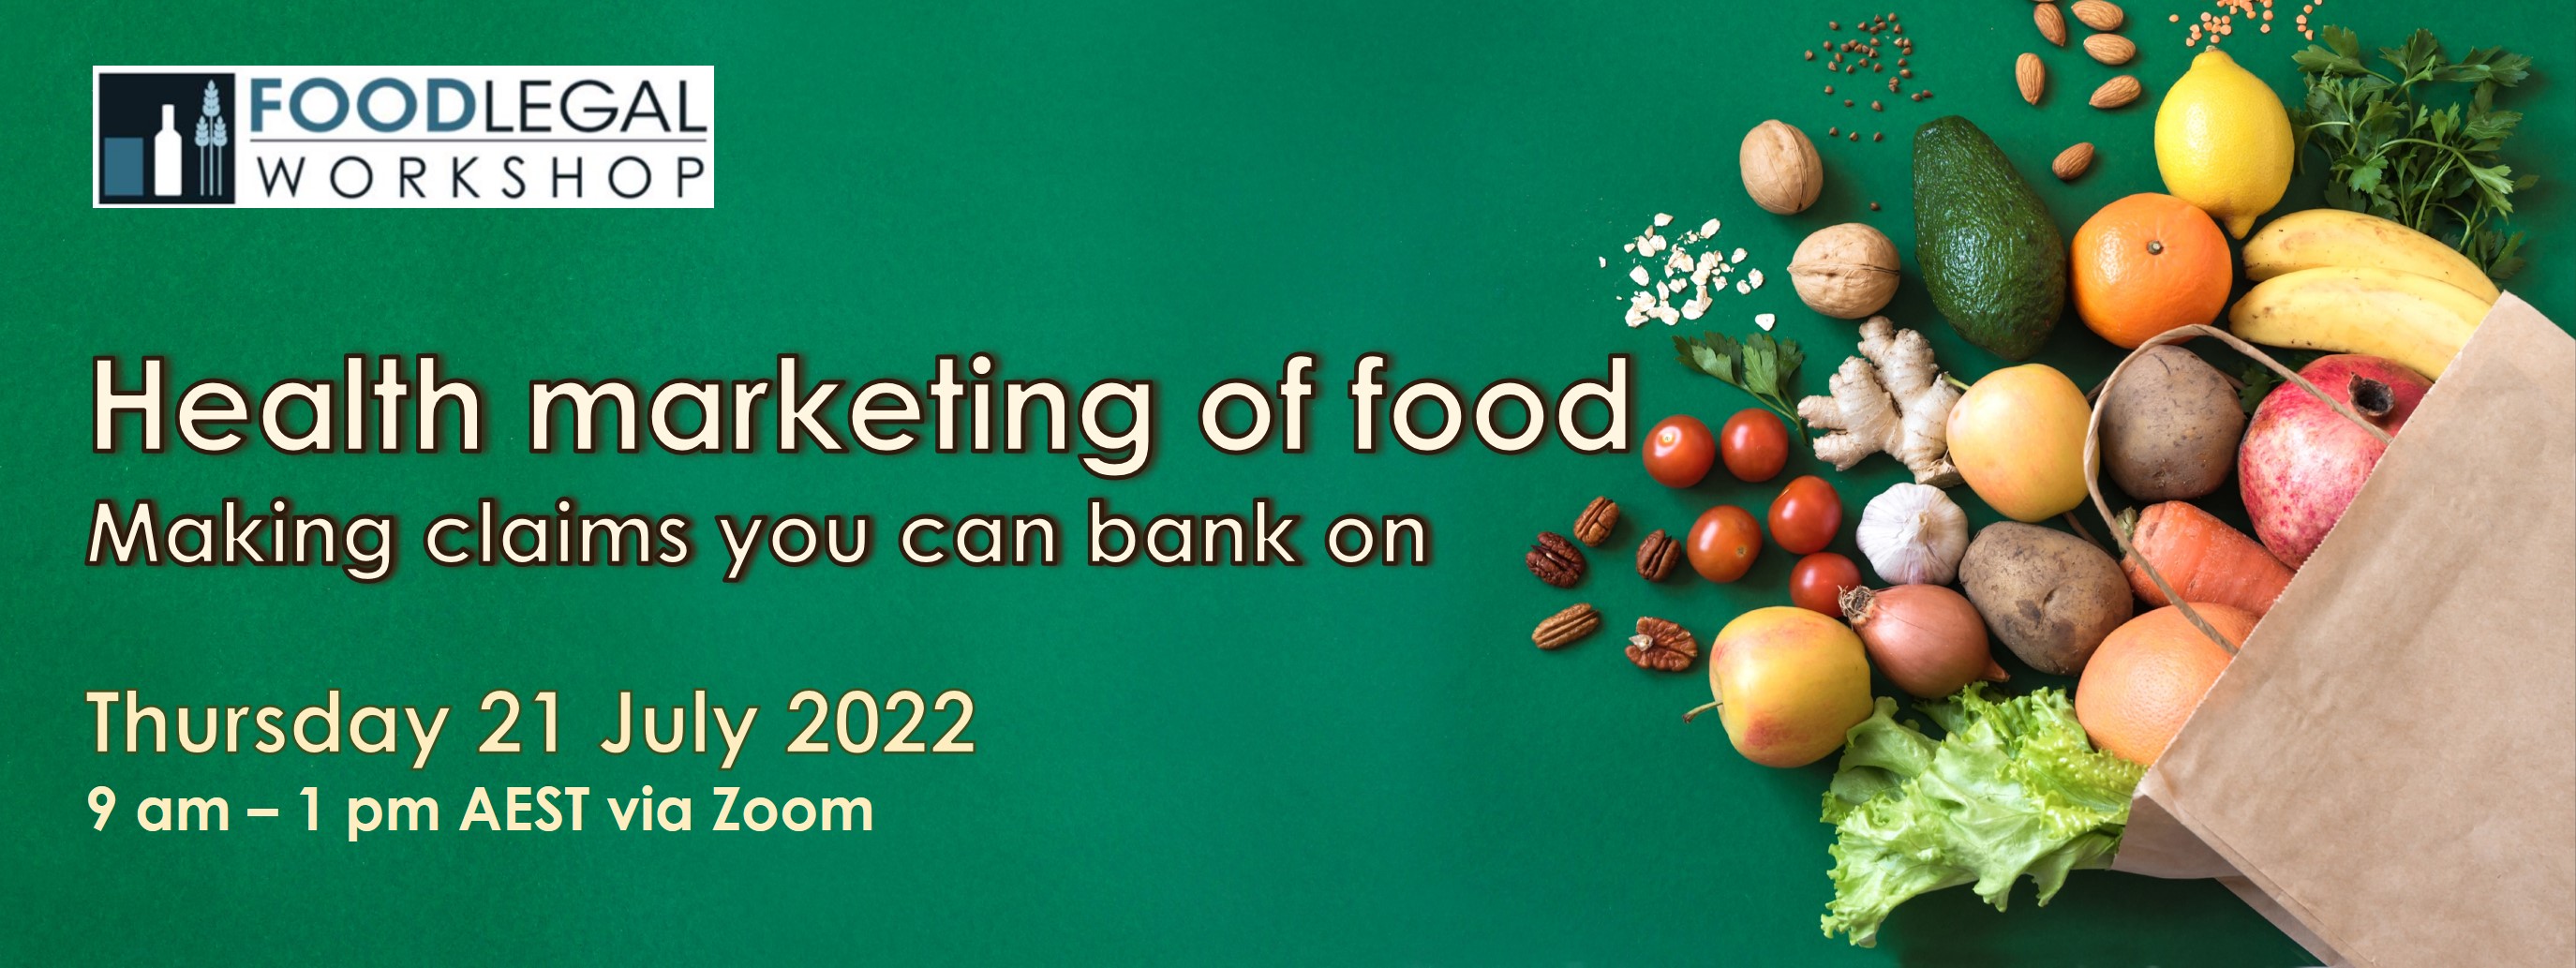  Jul 21, 2022 - HEALTH MARKETING OF FOOD - 